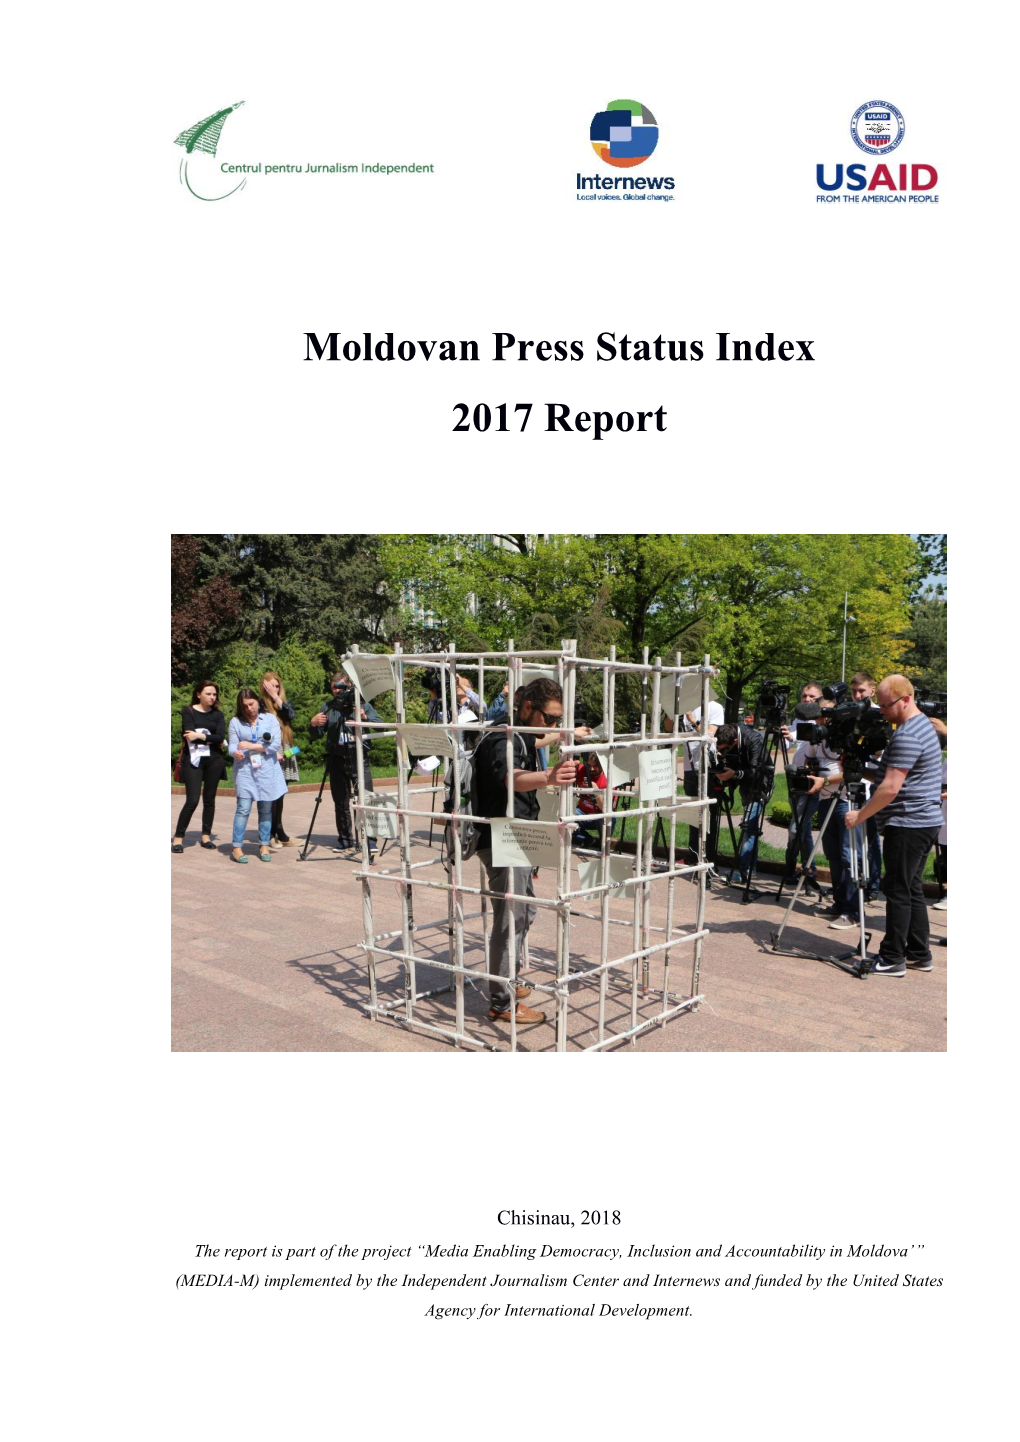 Moldovan Press Status Index 2017 Report